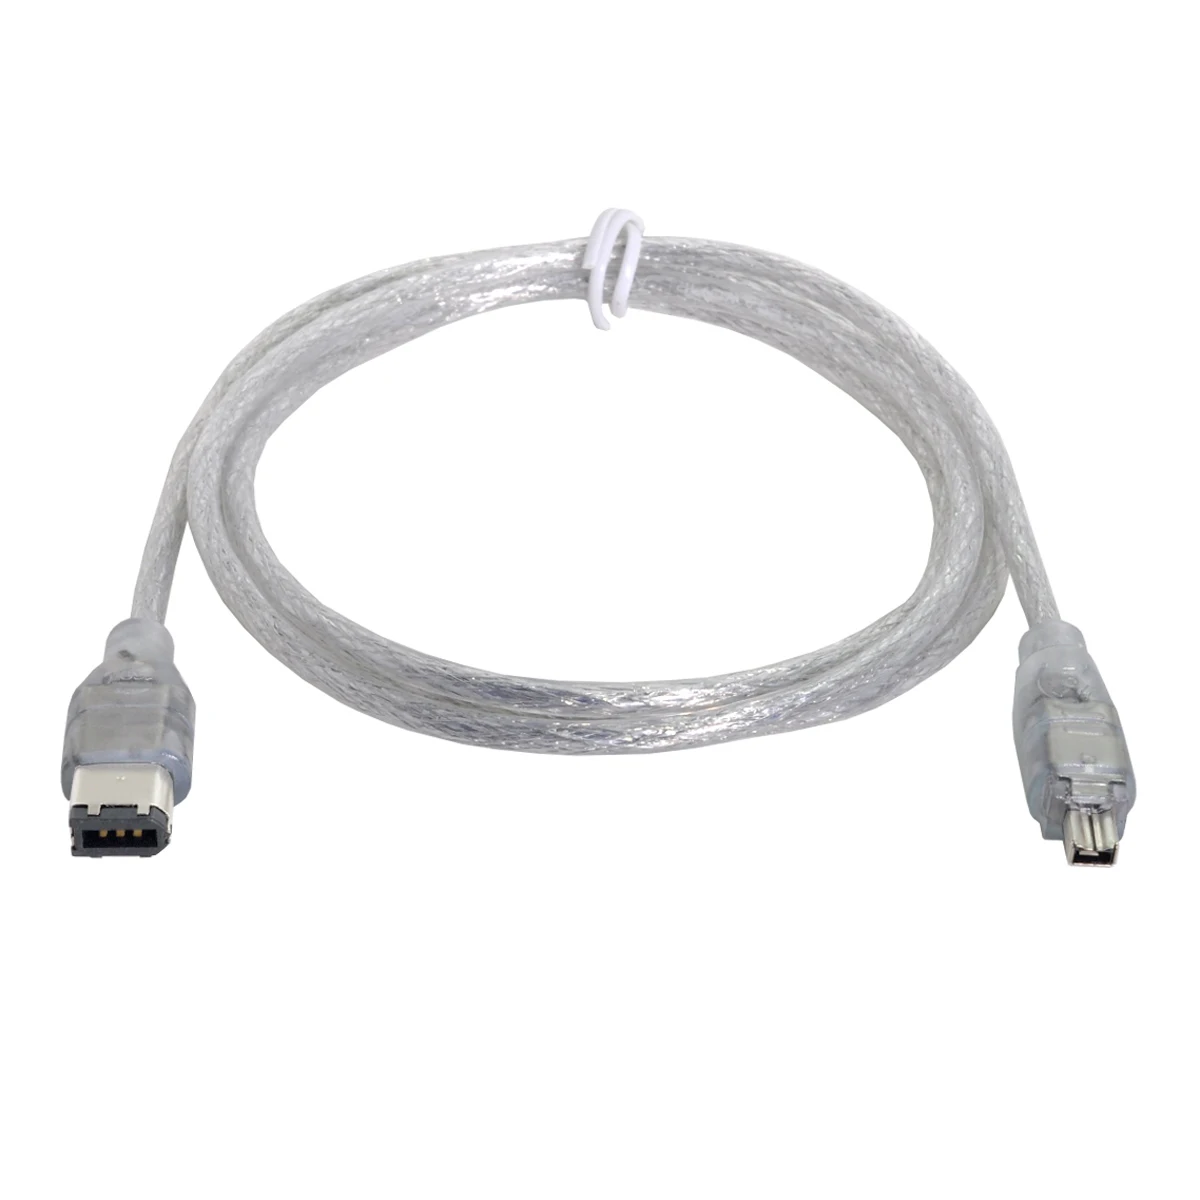 

Zihan CY 1394 6Pin к Firewire 400 IEEE 1394 4-контактный штекер iLink адаптер кабель для камеры видеокамеры